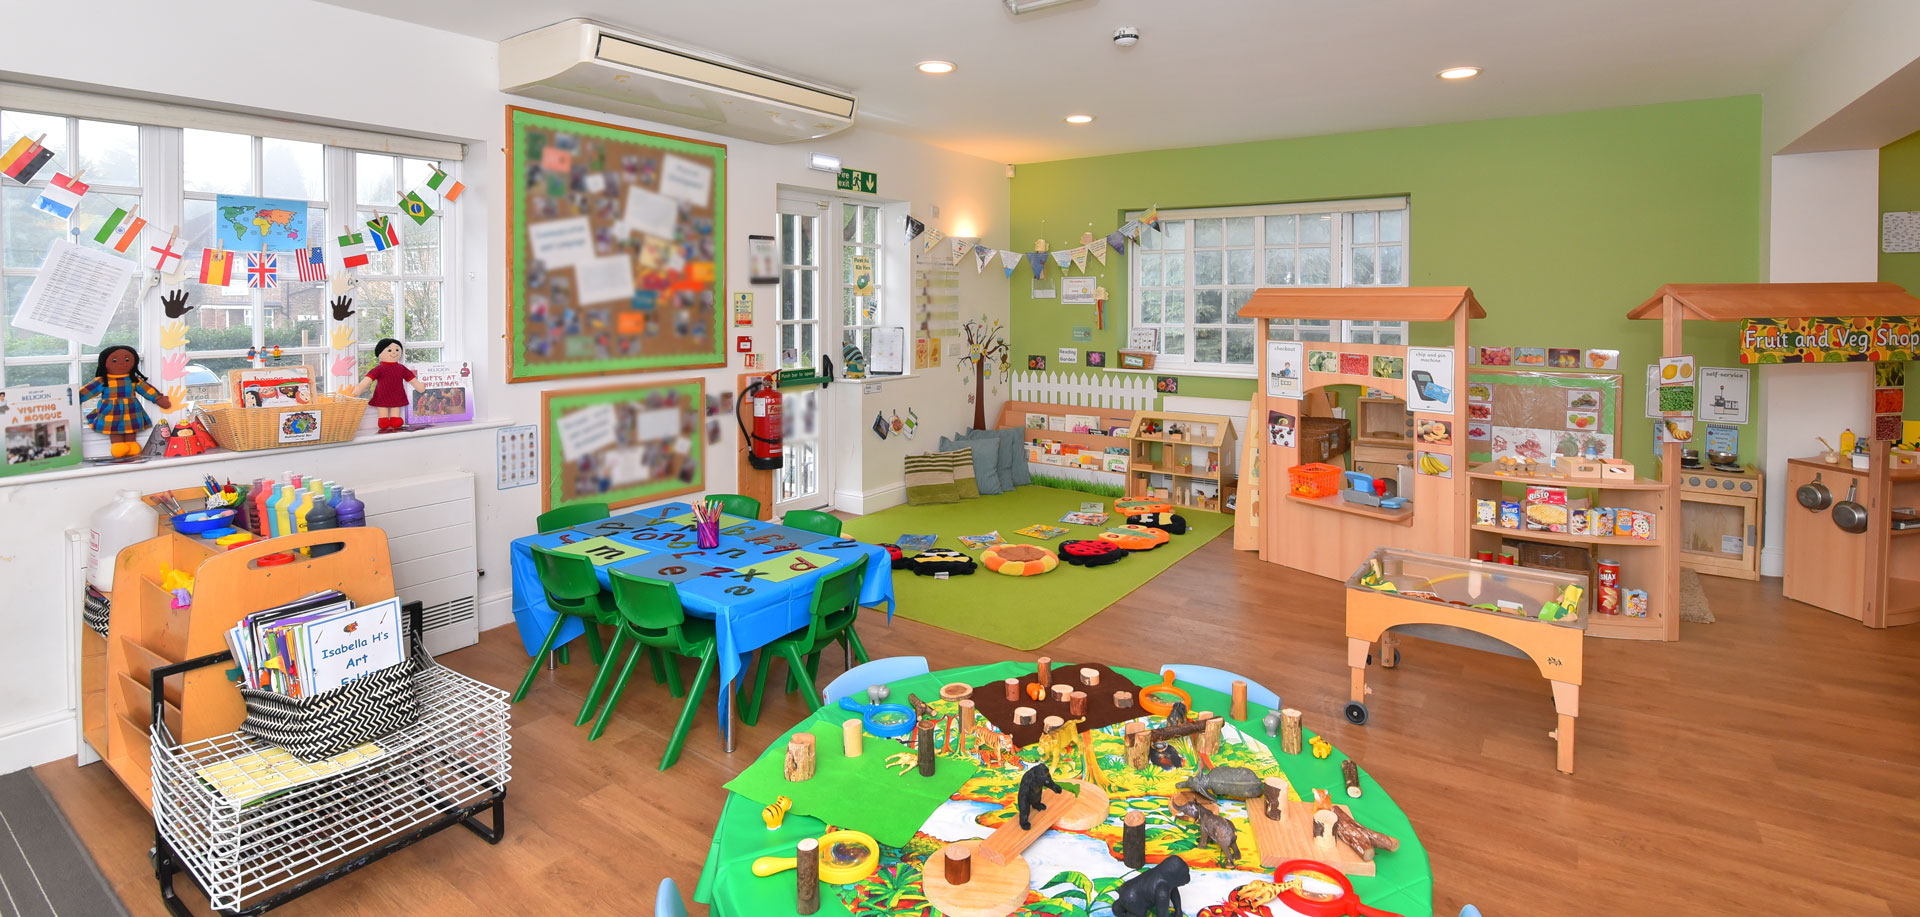 Banstead Day Nursery and Preschool